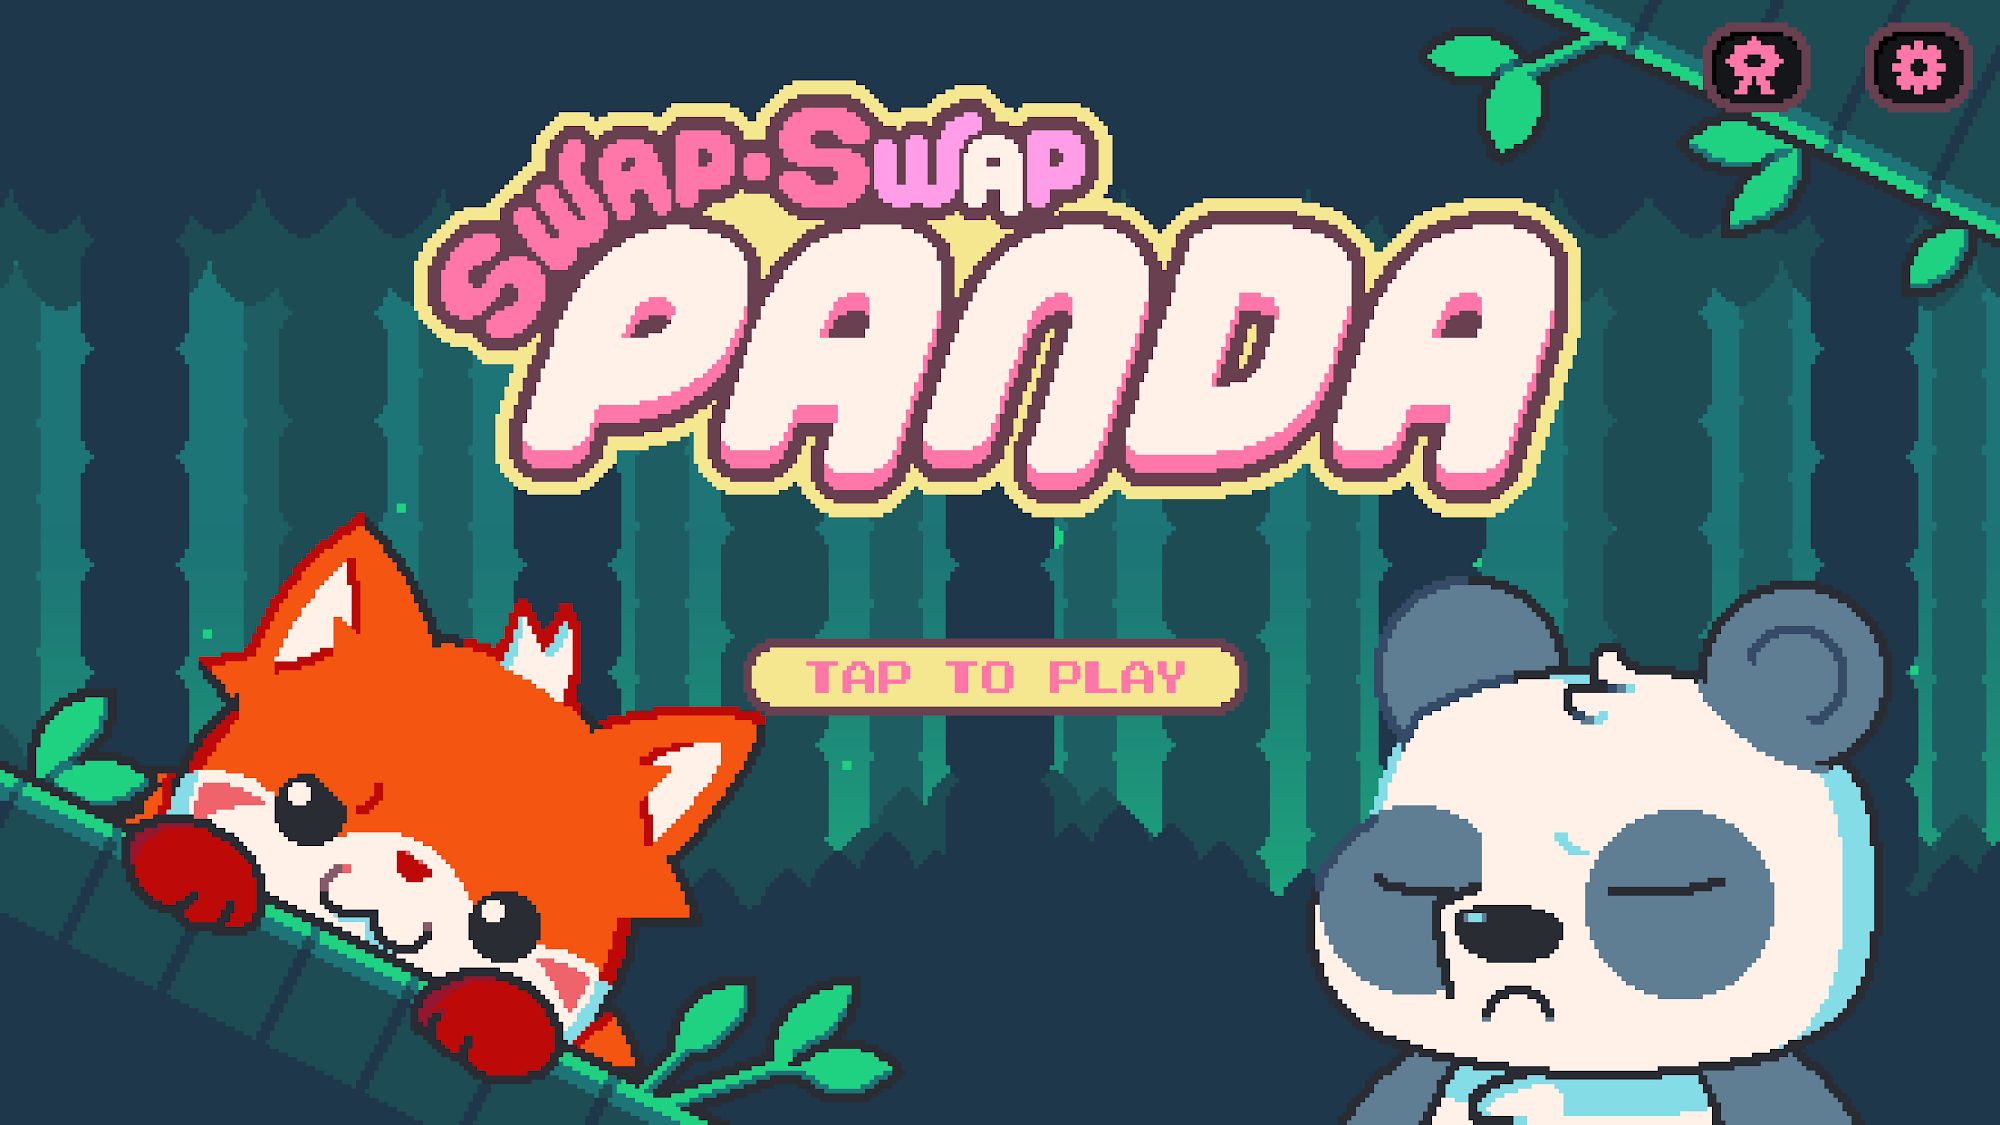 Swap-Swap Panda for Android